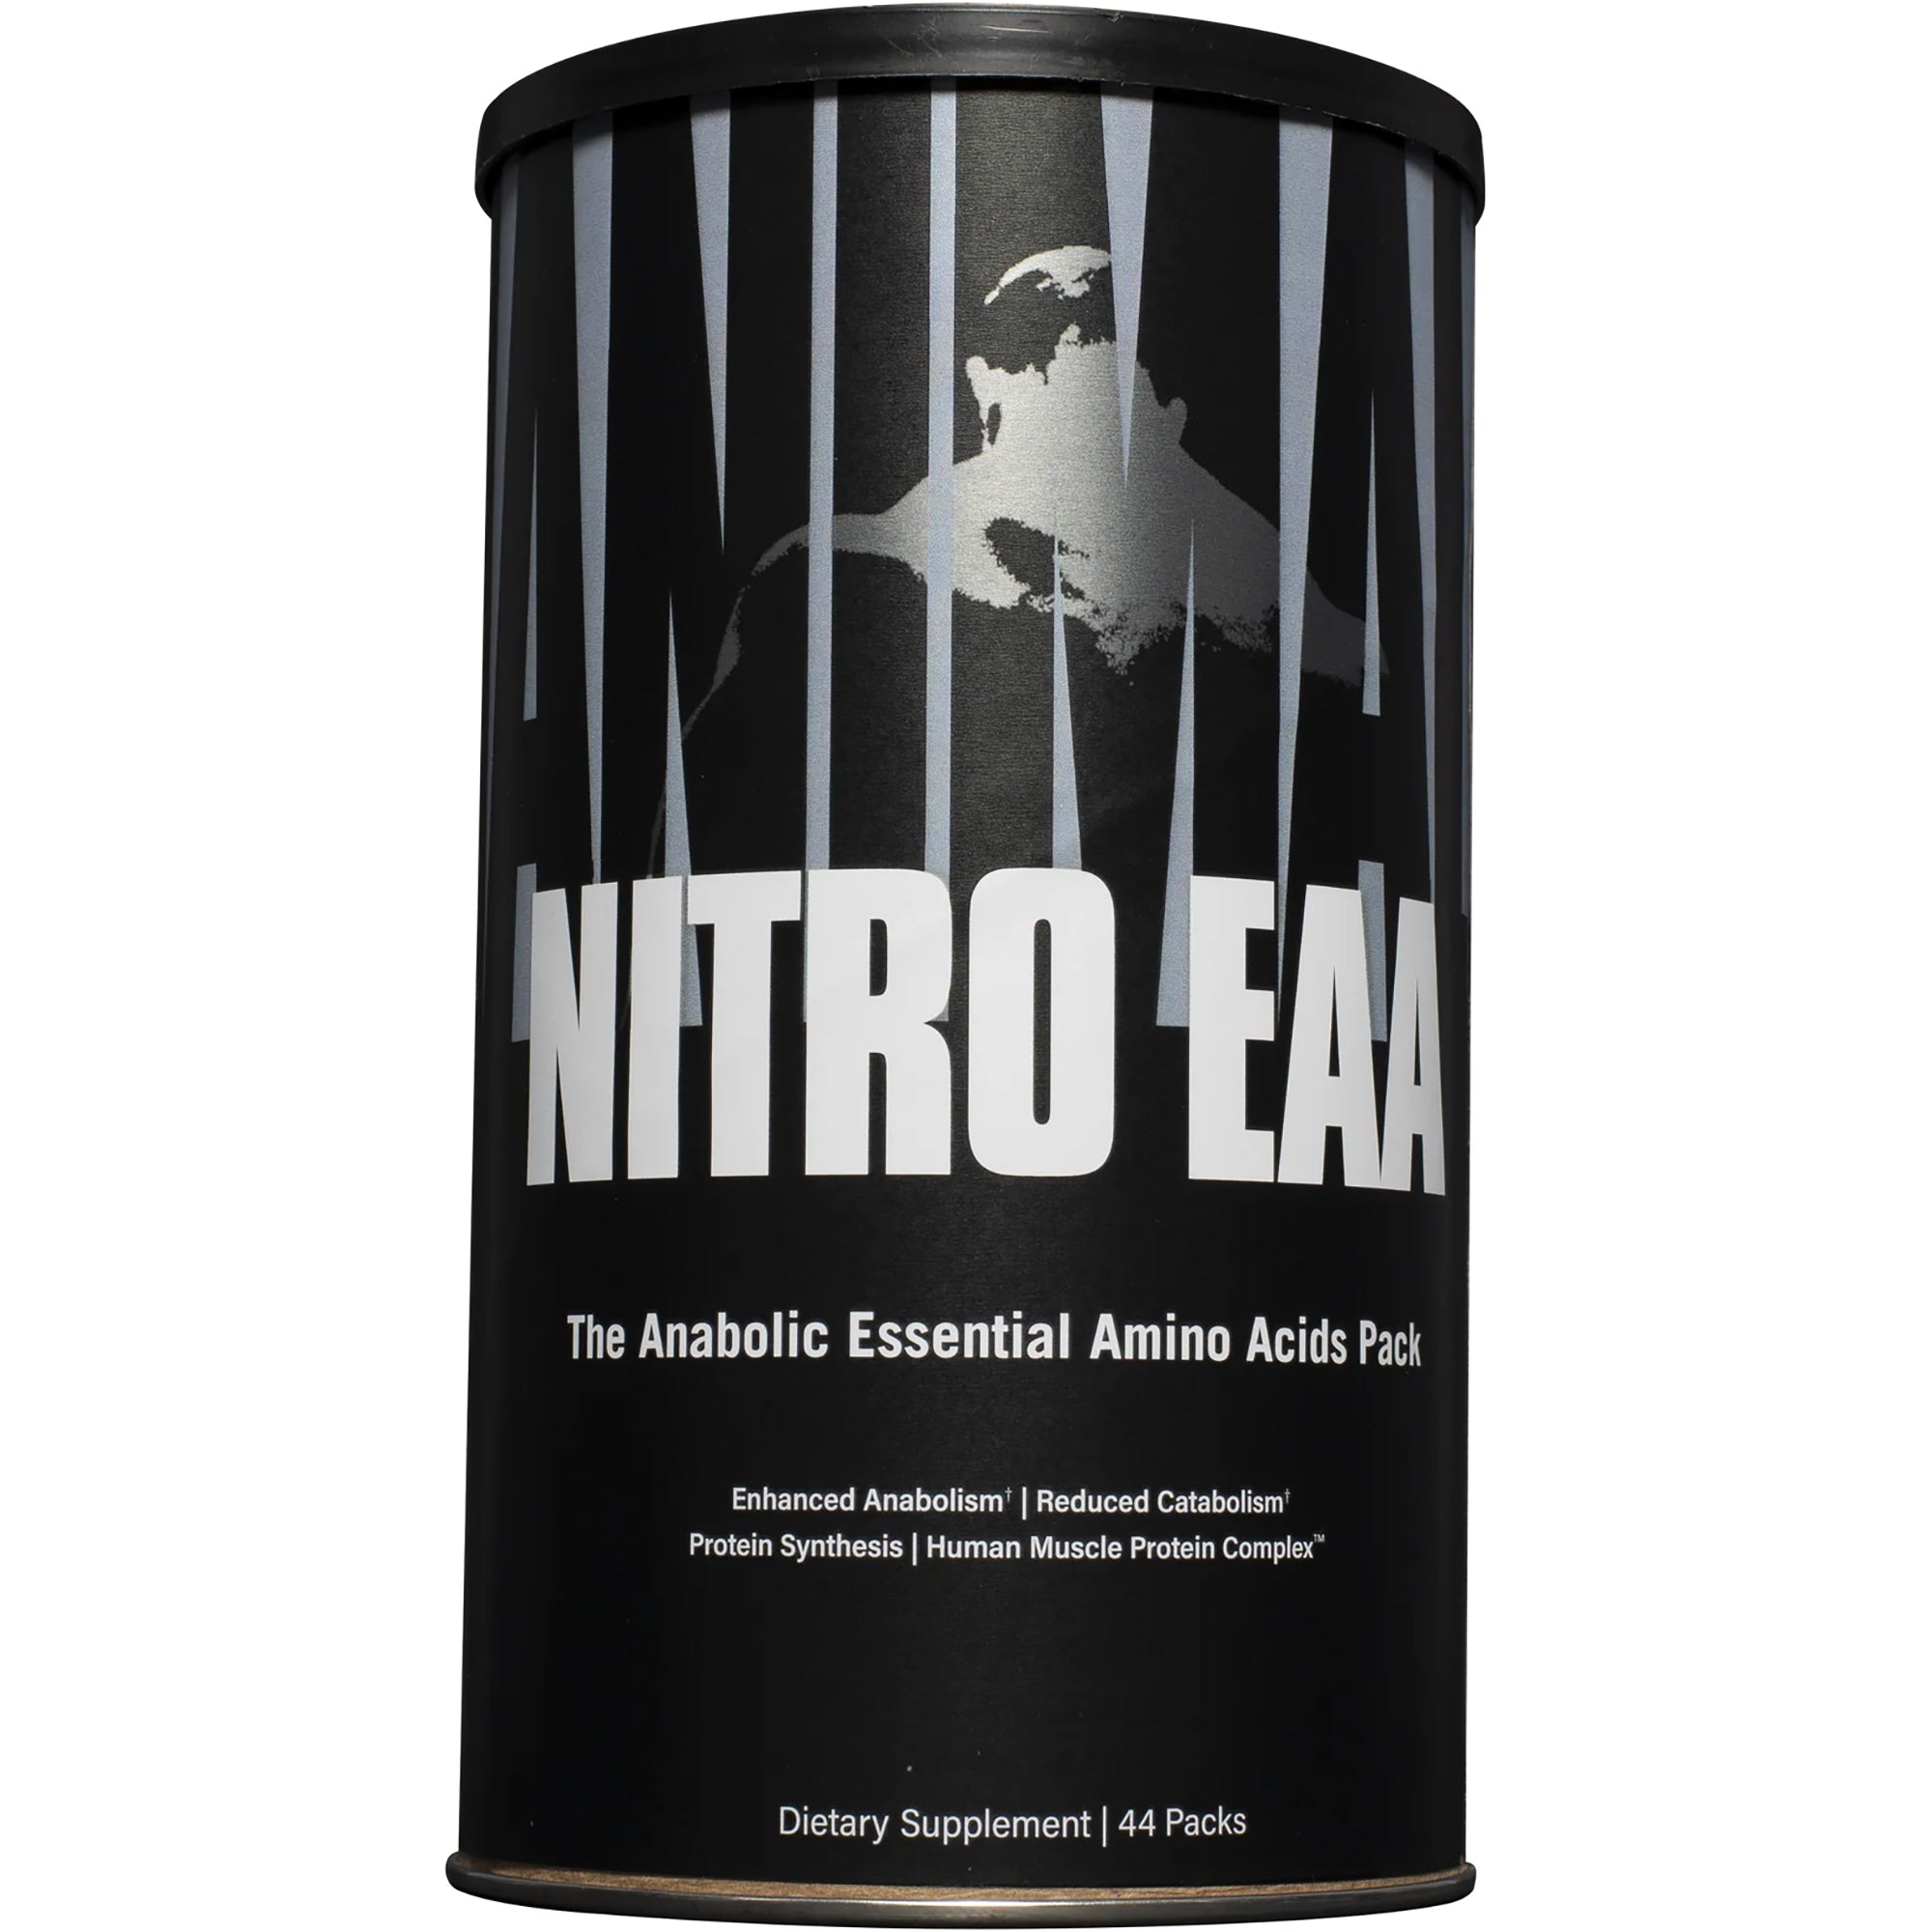 Universal Nutrition Animal Nitro Dietary Supplement Universal Nutrition